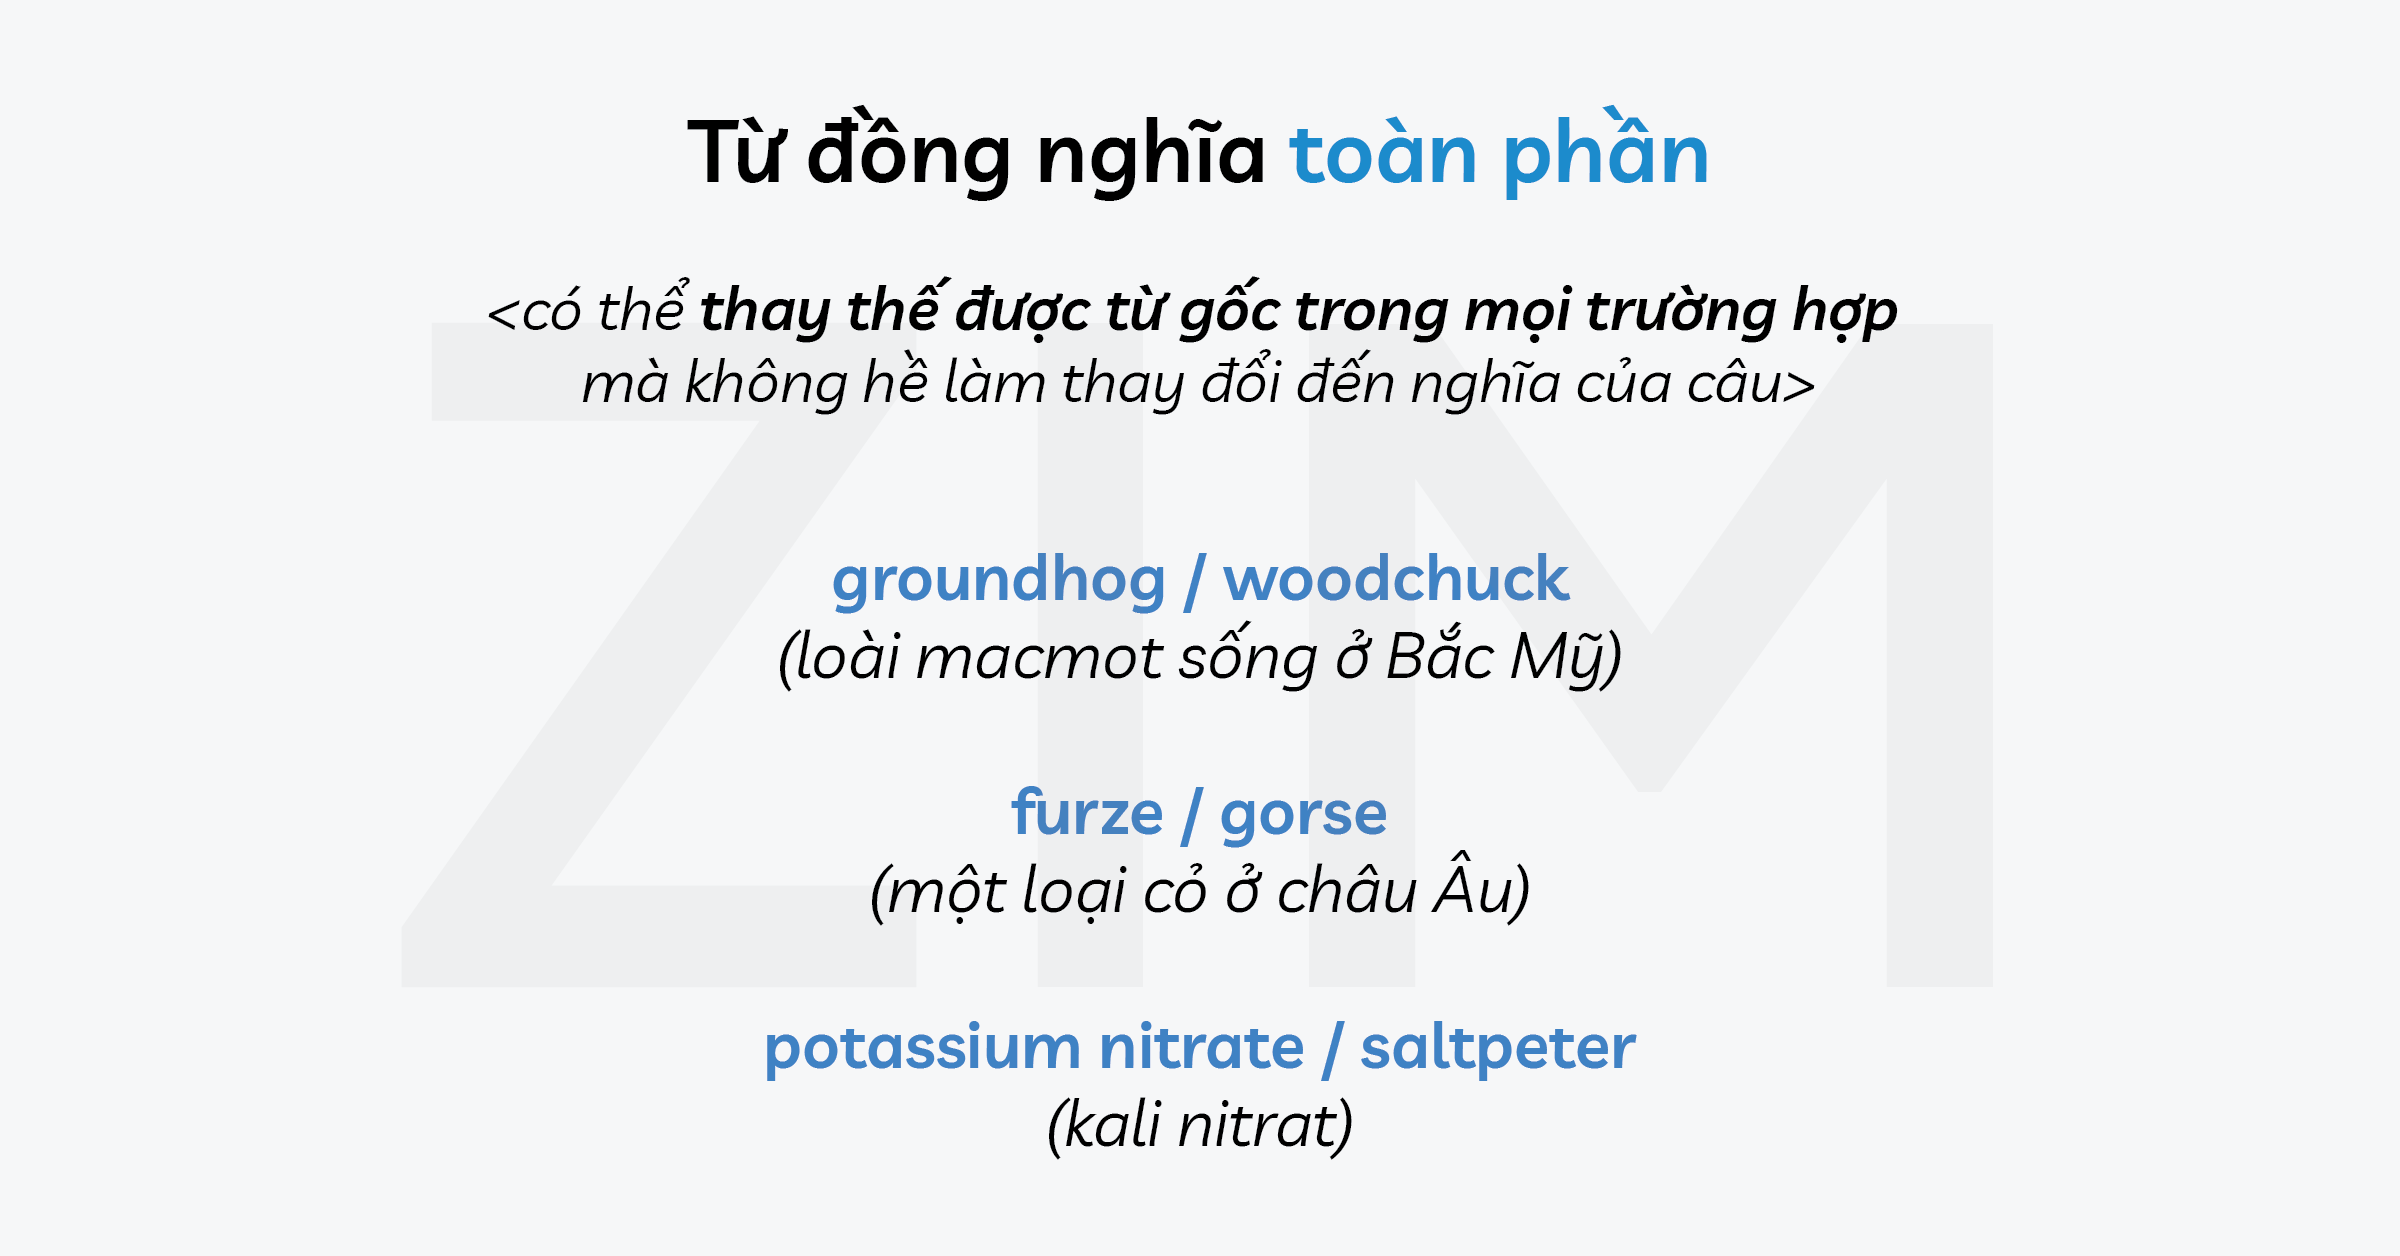 tu-dong-nghia-synonyms-toan-phan